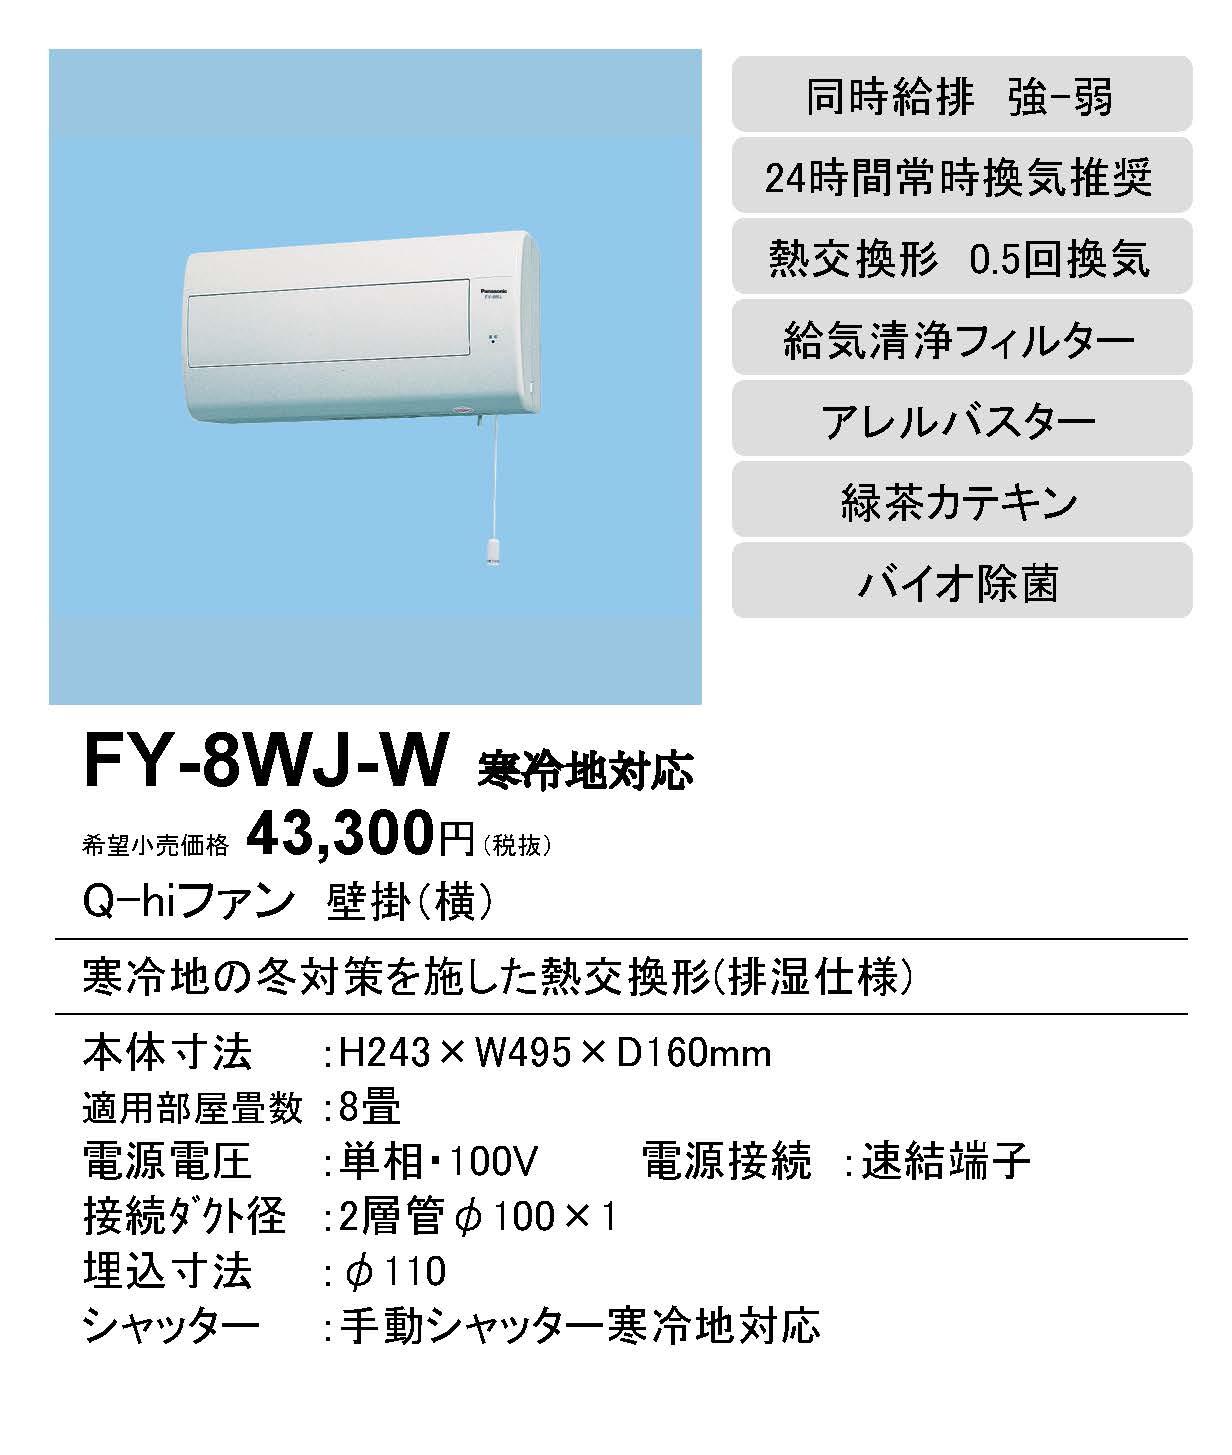 Panasonic パナソニック FY-8WJ-W Q-hiファン 壁掛形 1パイプ方式 熱交換形 寒冷地用 居室用 排湿形(0.5回/h 換気用)8畳用  強制同時給排 強 弱 手動式シャッター